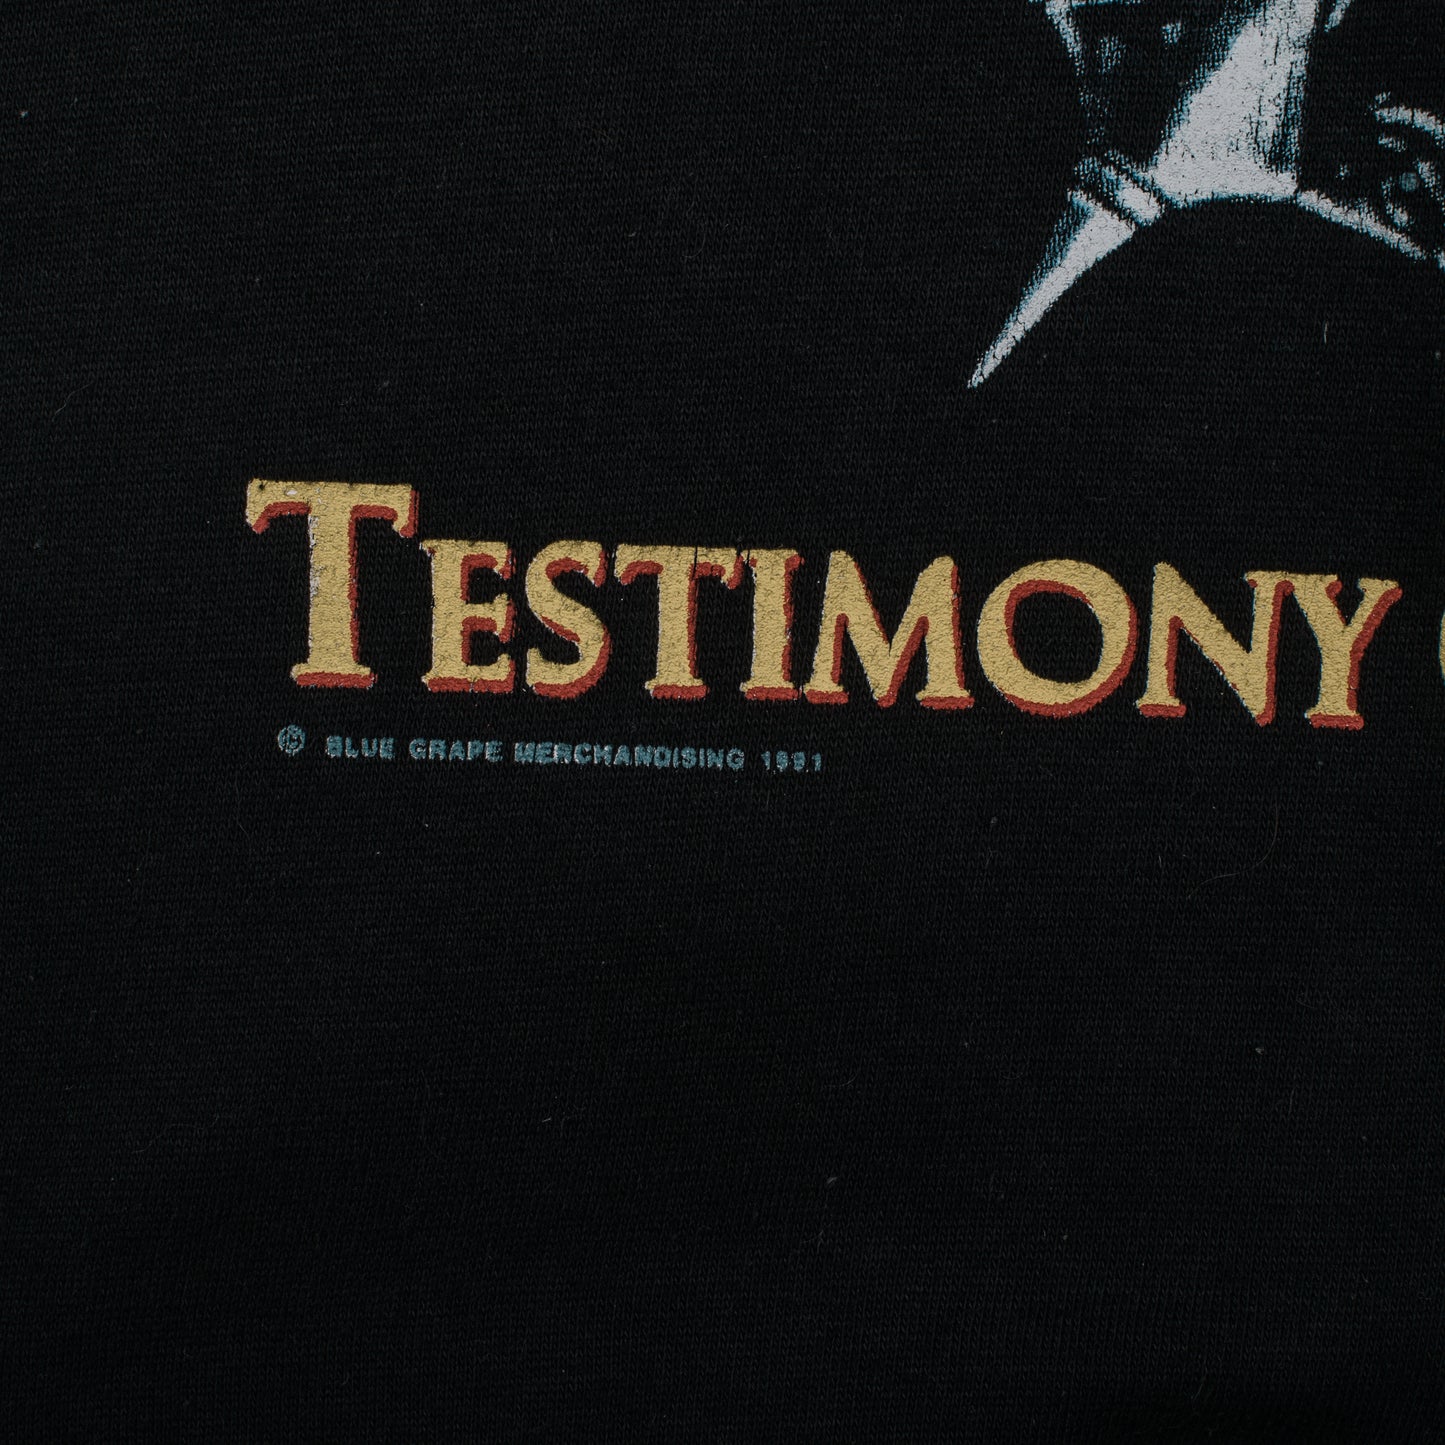 Vintage 1992 Pestilence Testimony Of The Ancients Tour Sweatshirt